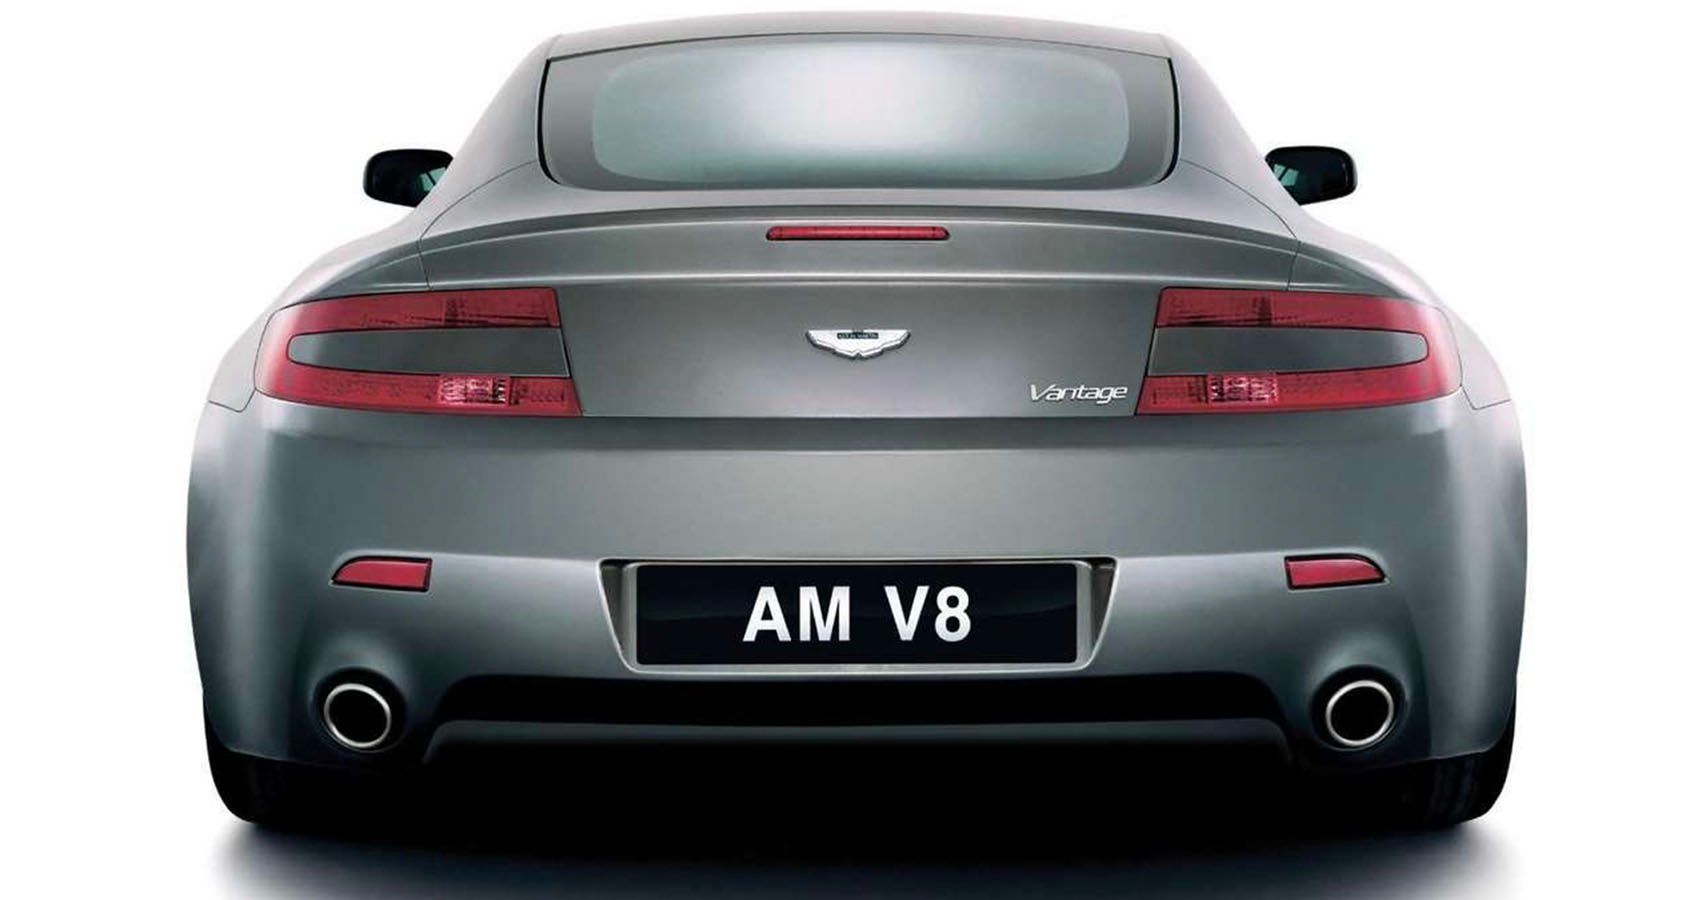 Aston Martin V8 vantage Rear Studio Image